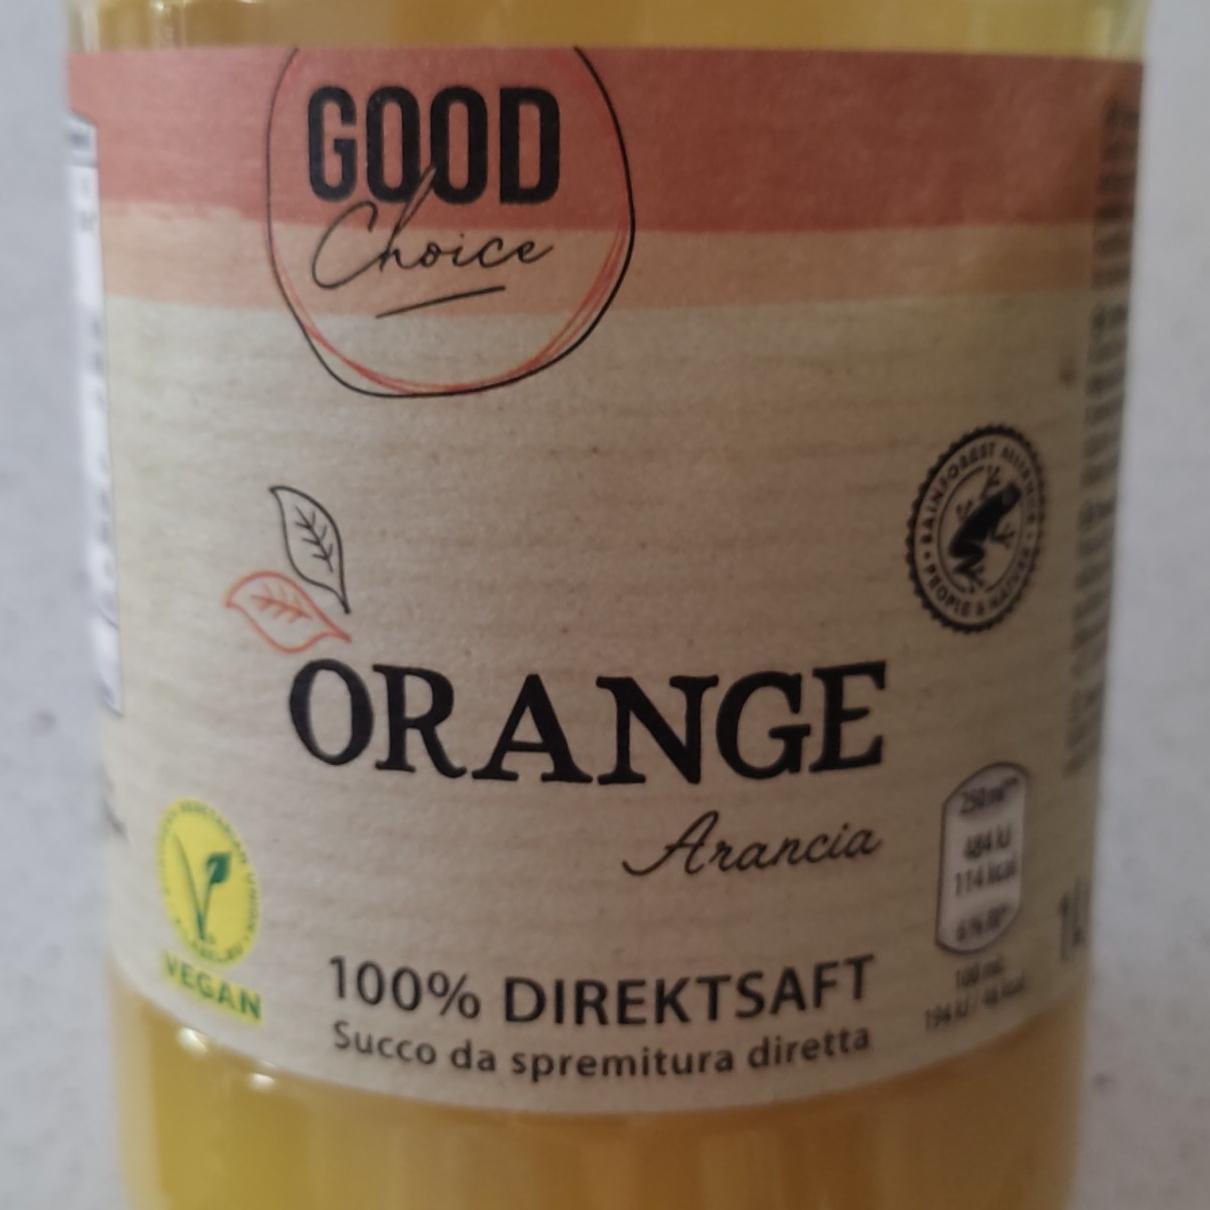 Fotografie - Orange 100% Direktsaft Good choice